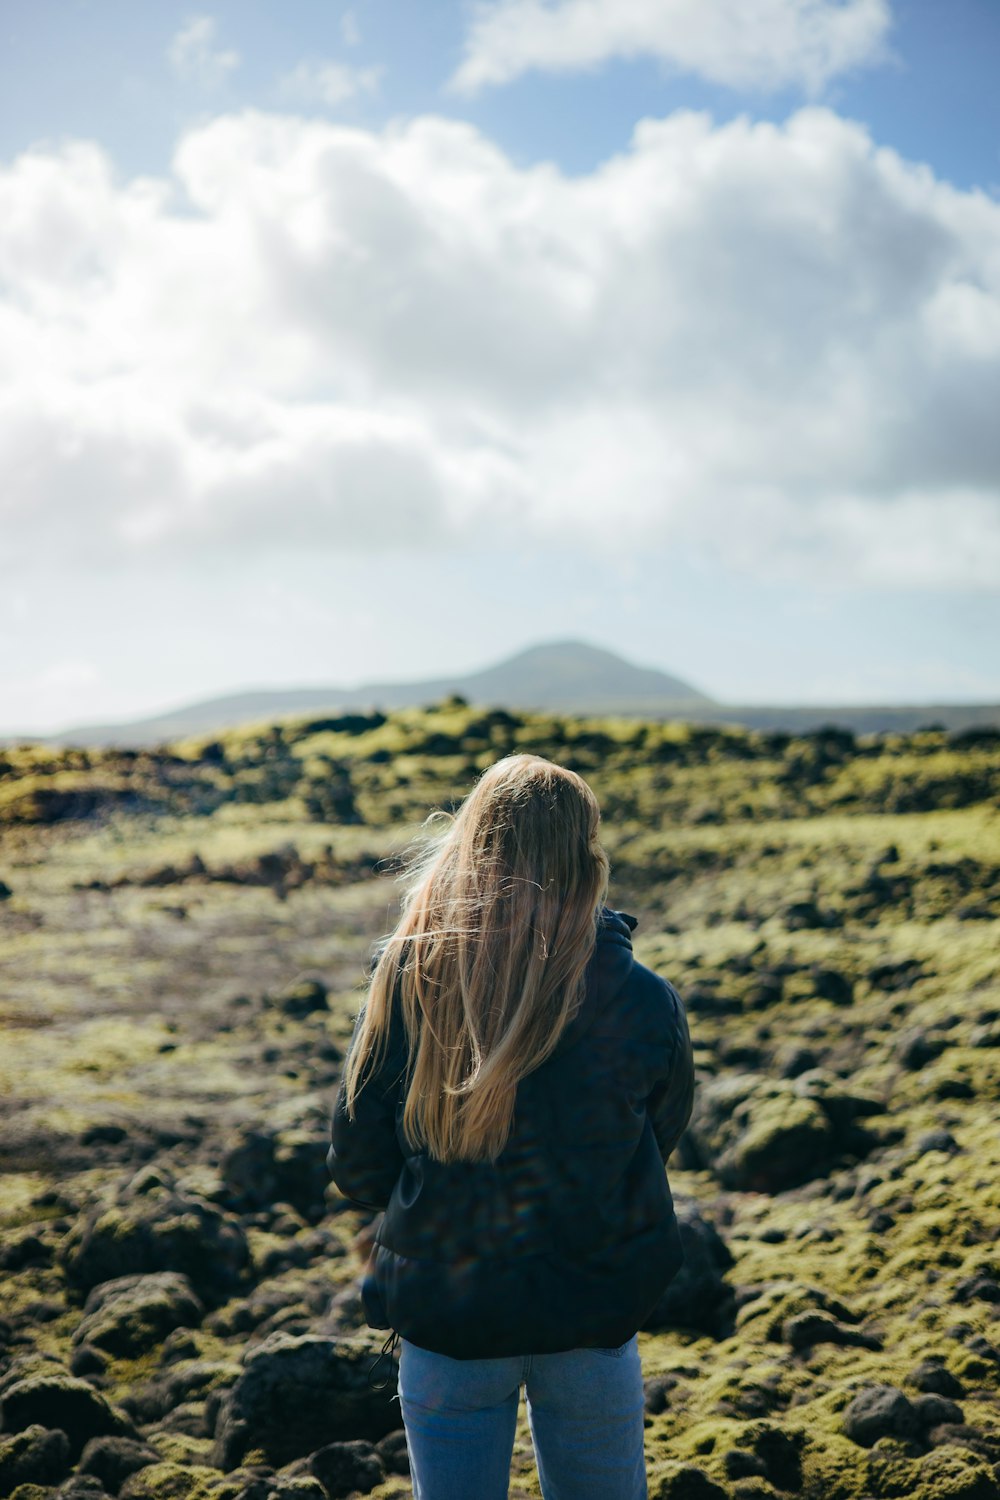 a woman in a black jacket is standing in a field